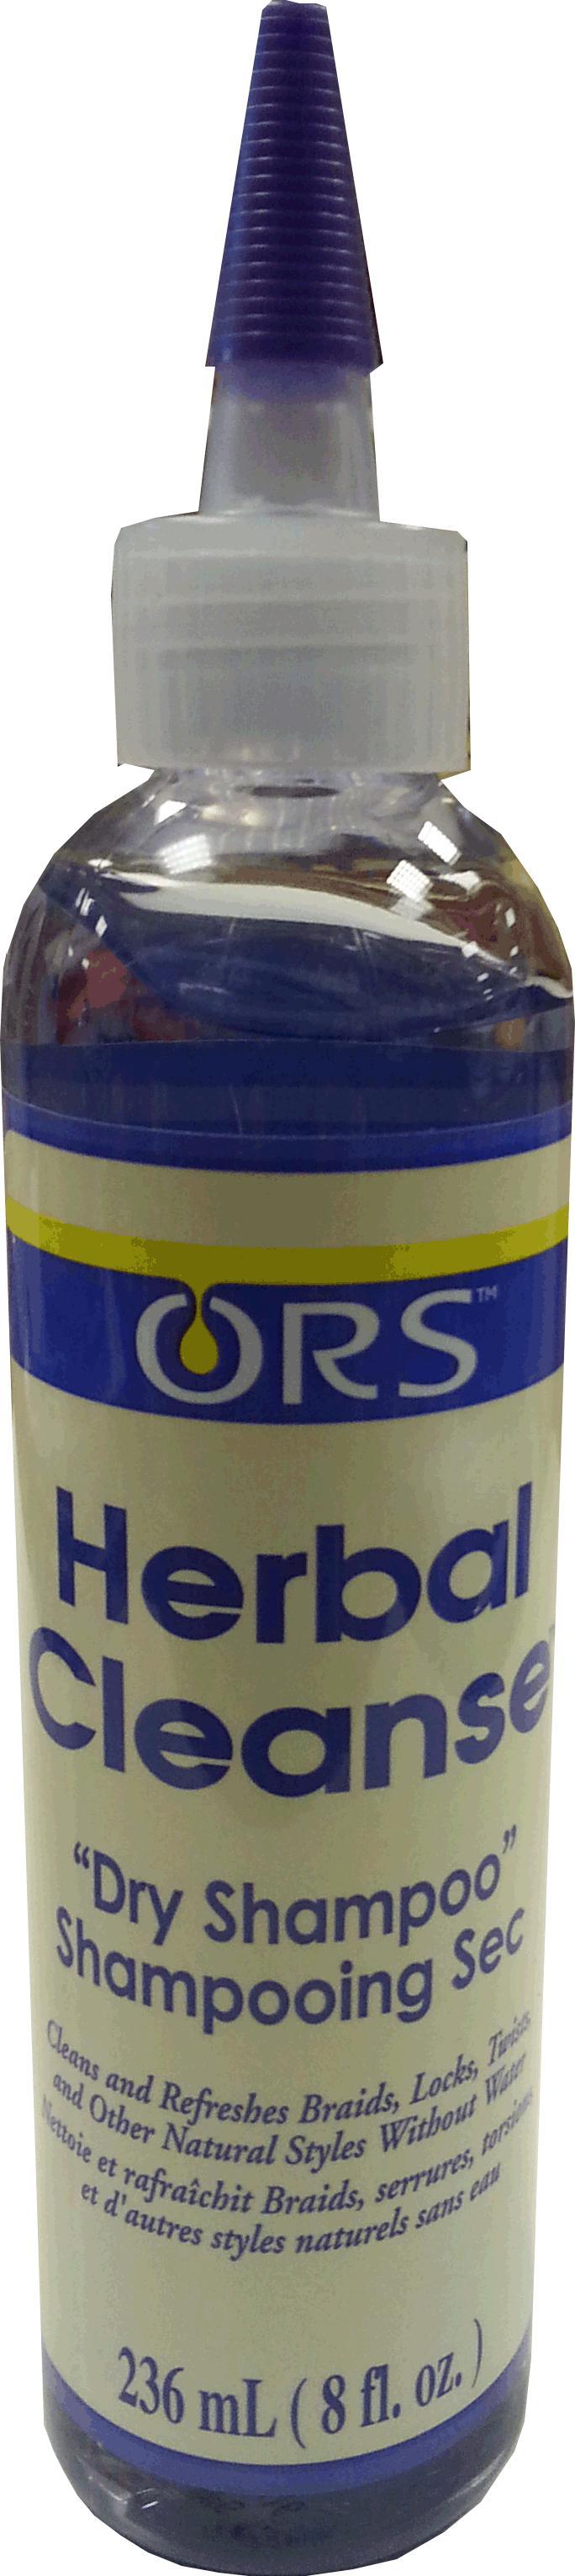 ORS Herbal Cleanse Dry Shampoo 251 ml